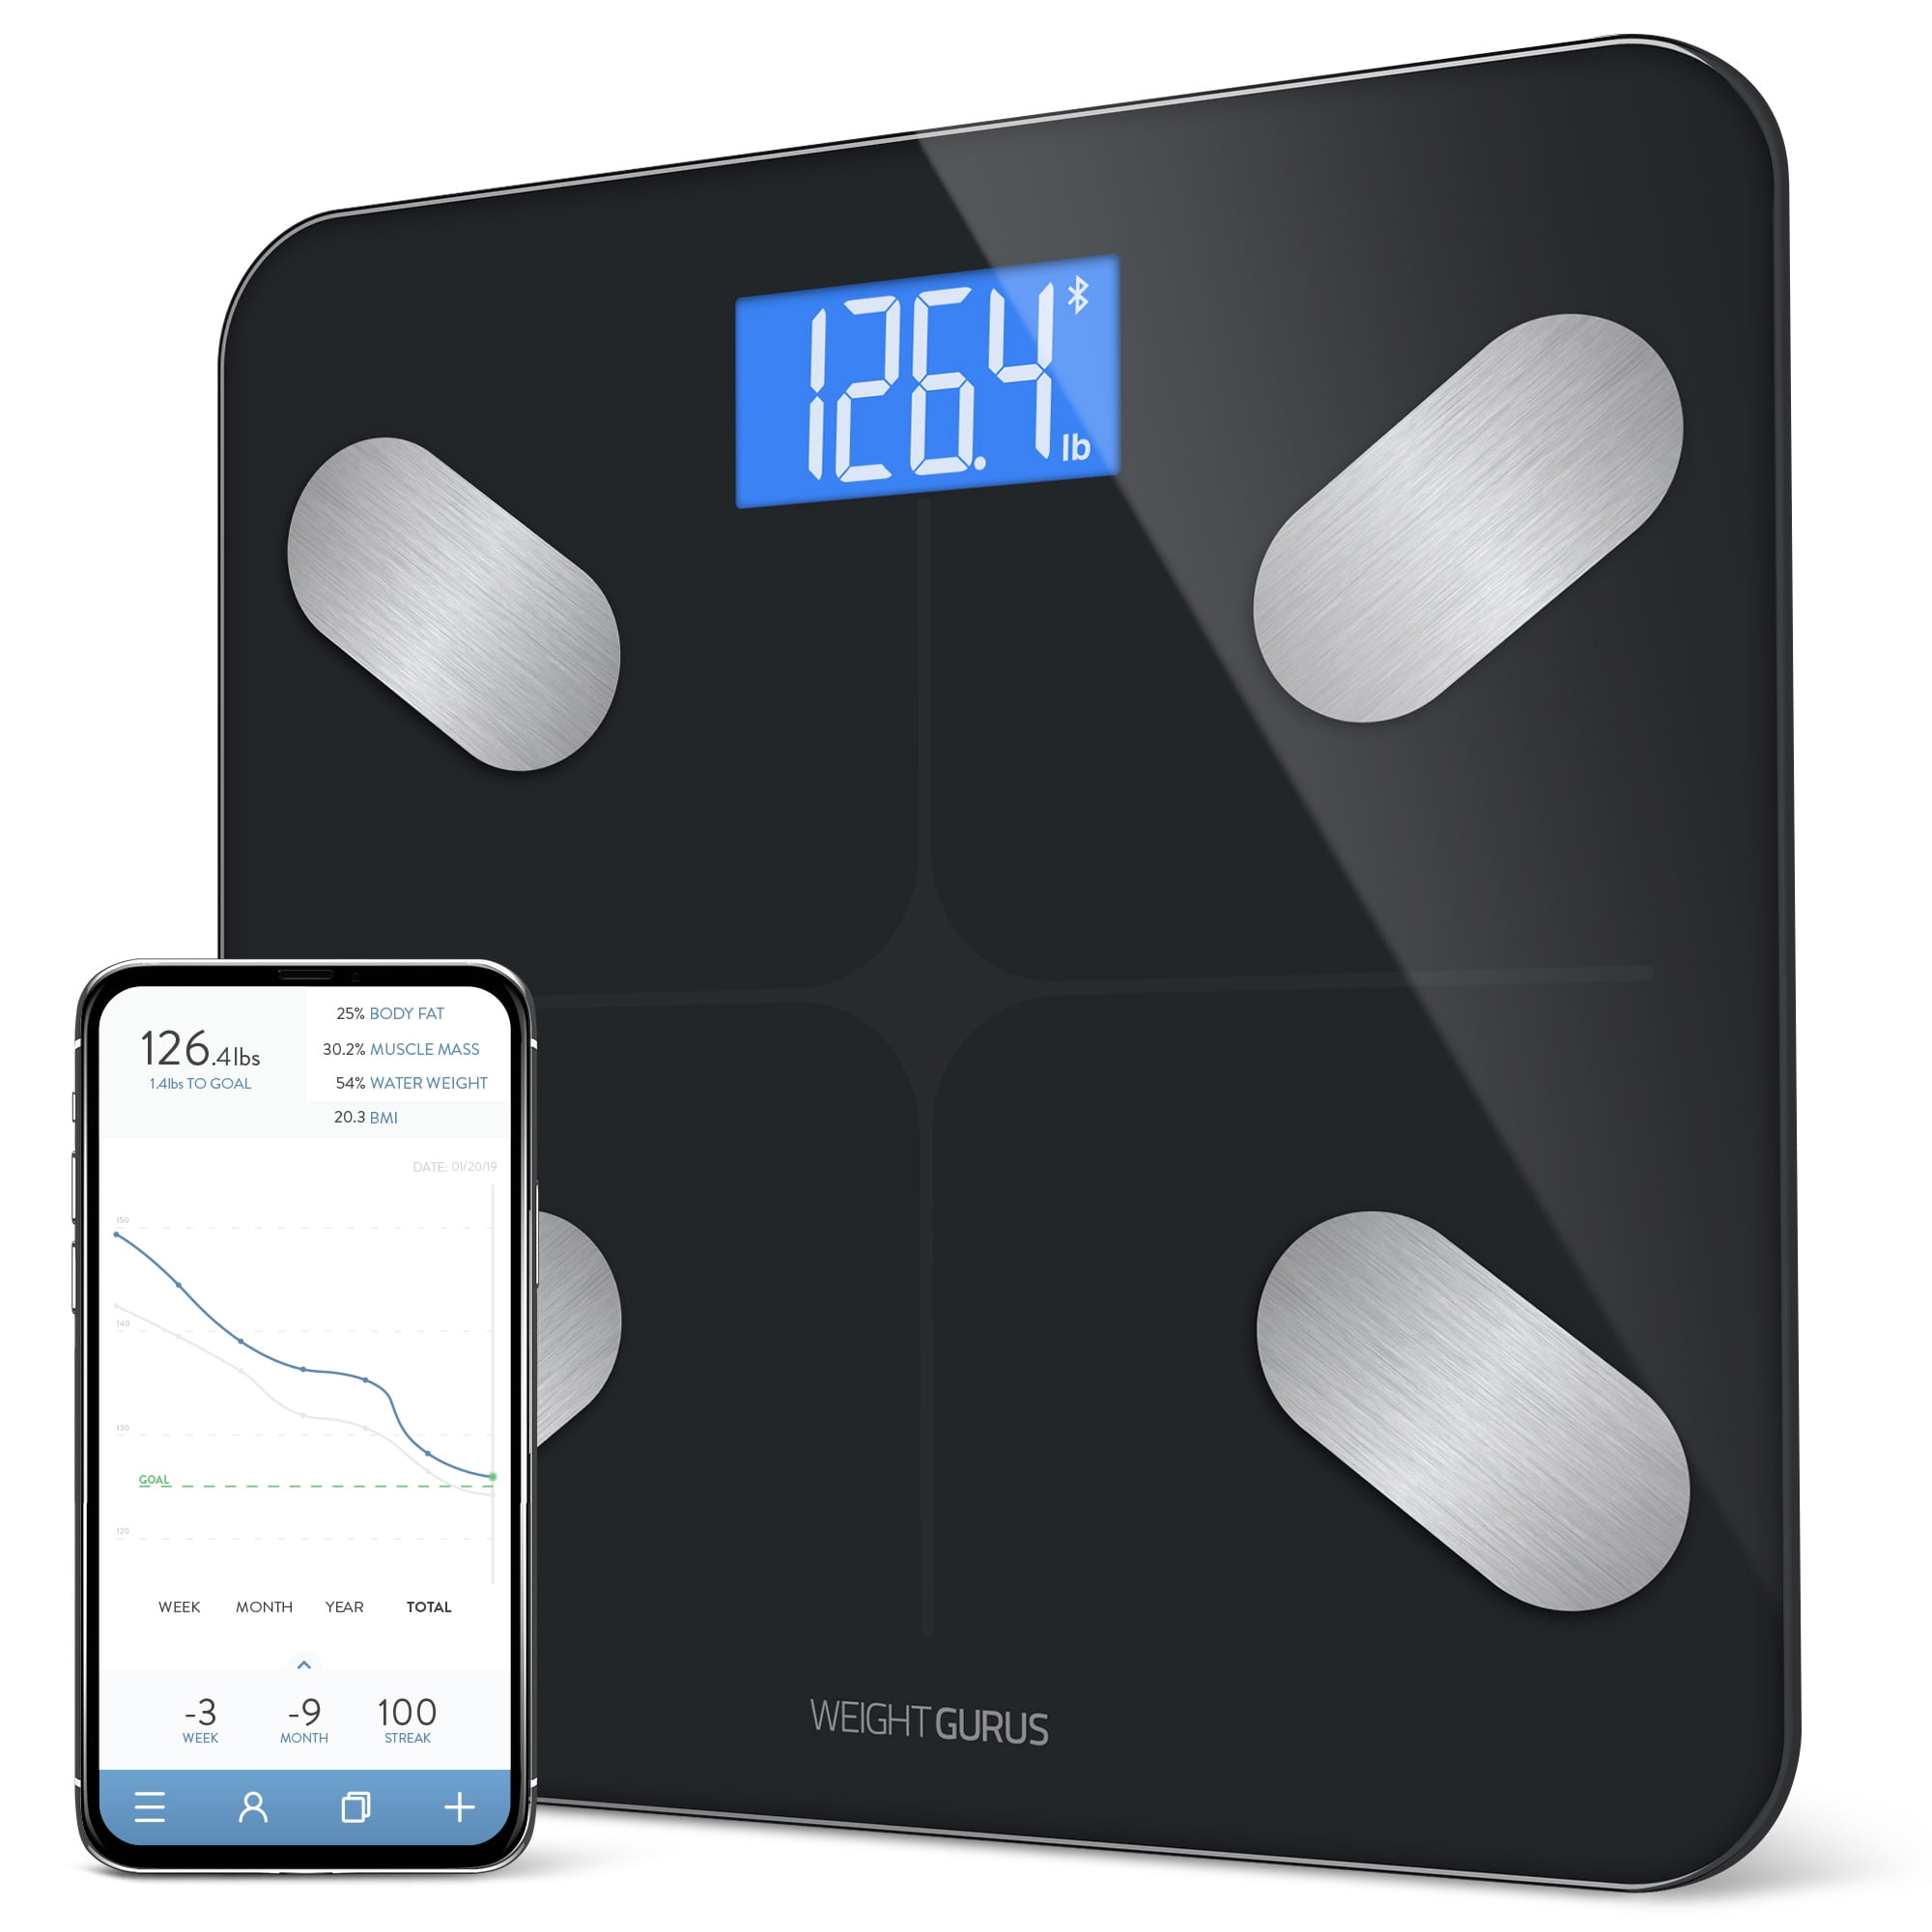 Sinocare Body Fat Scales Digital Bathroom Scales BMI Monitor Help Lose Weight 